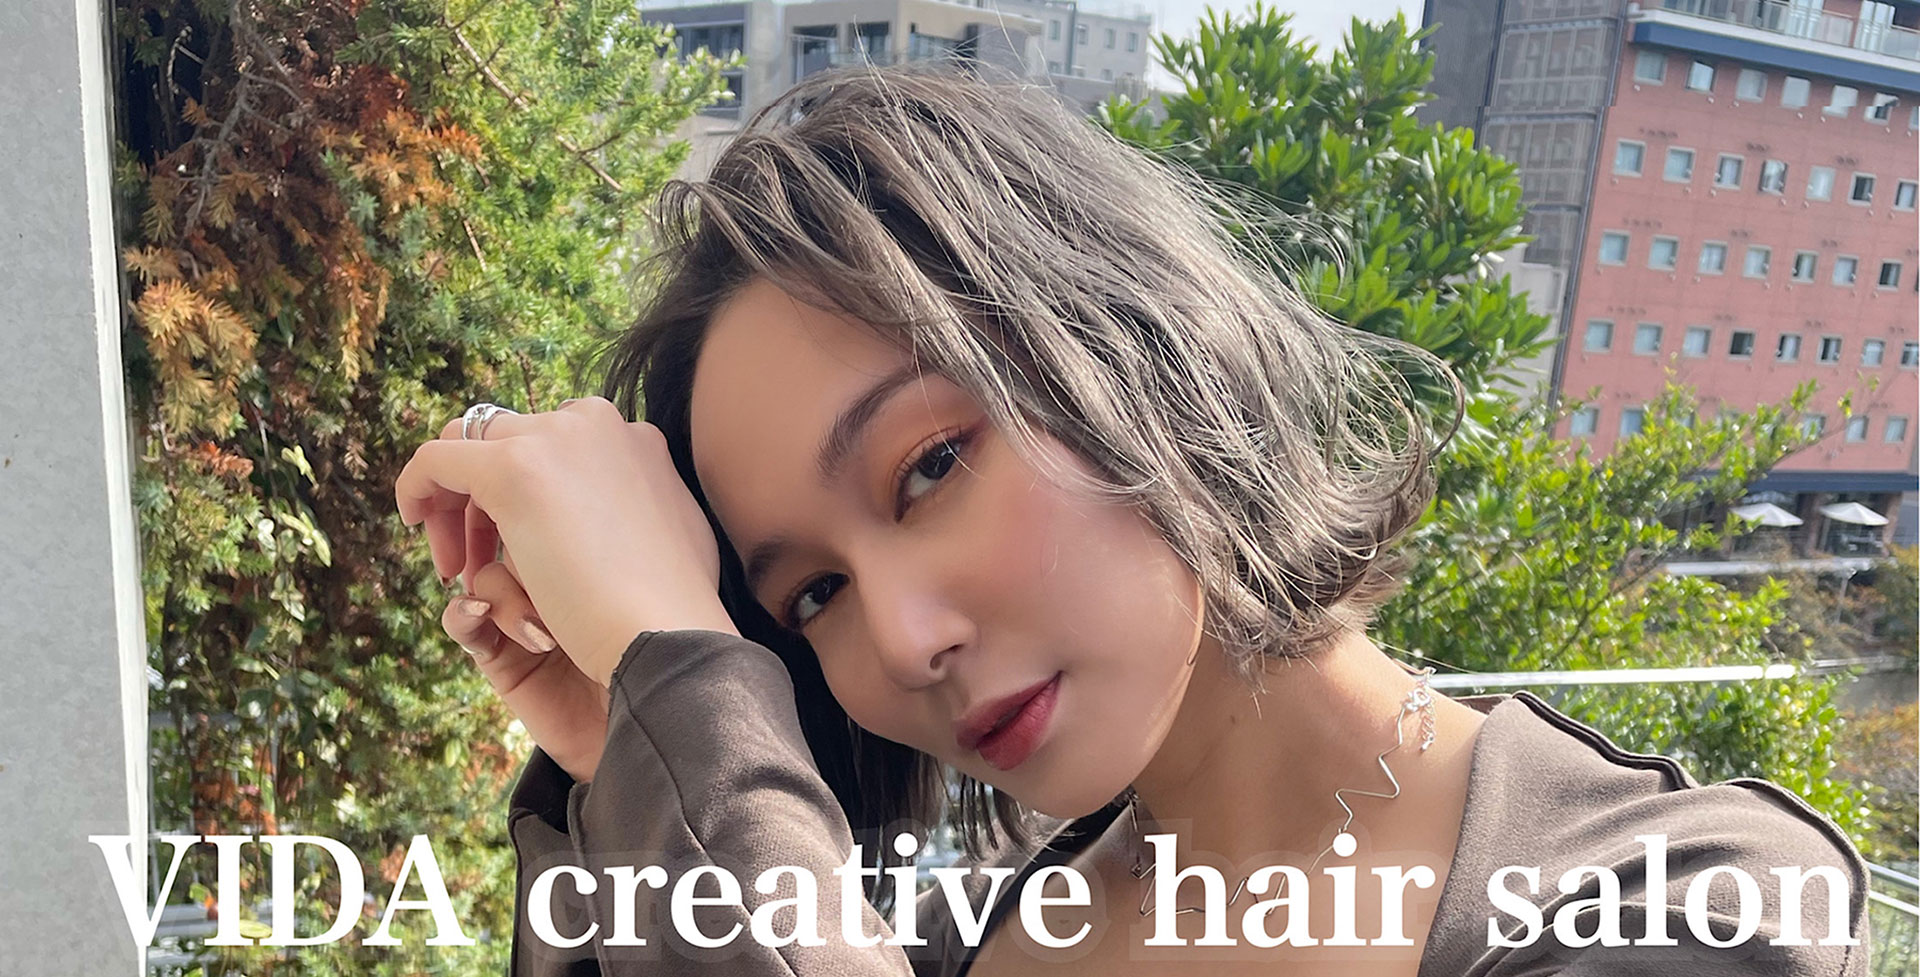 VIDA creative hair salon